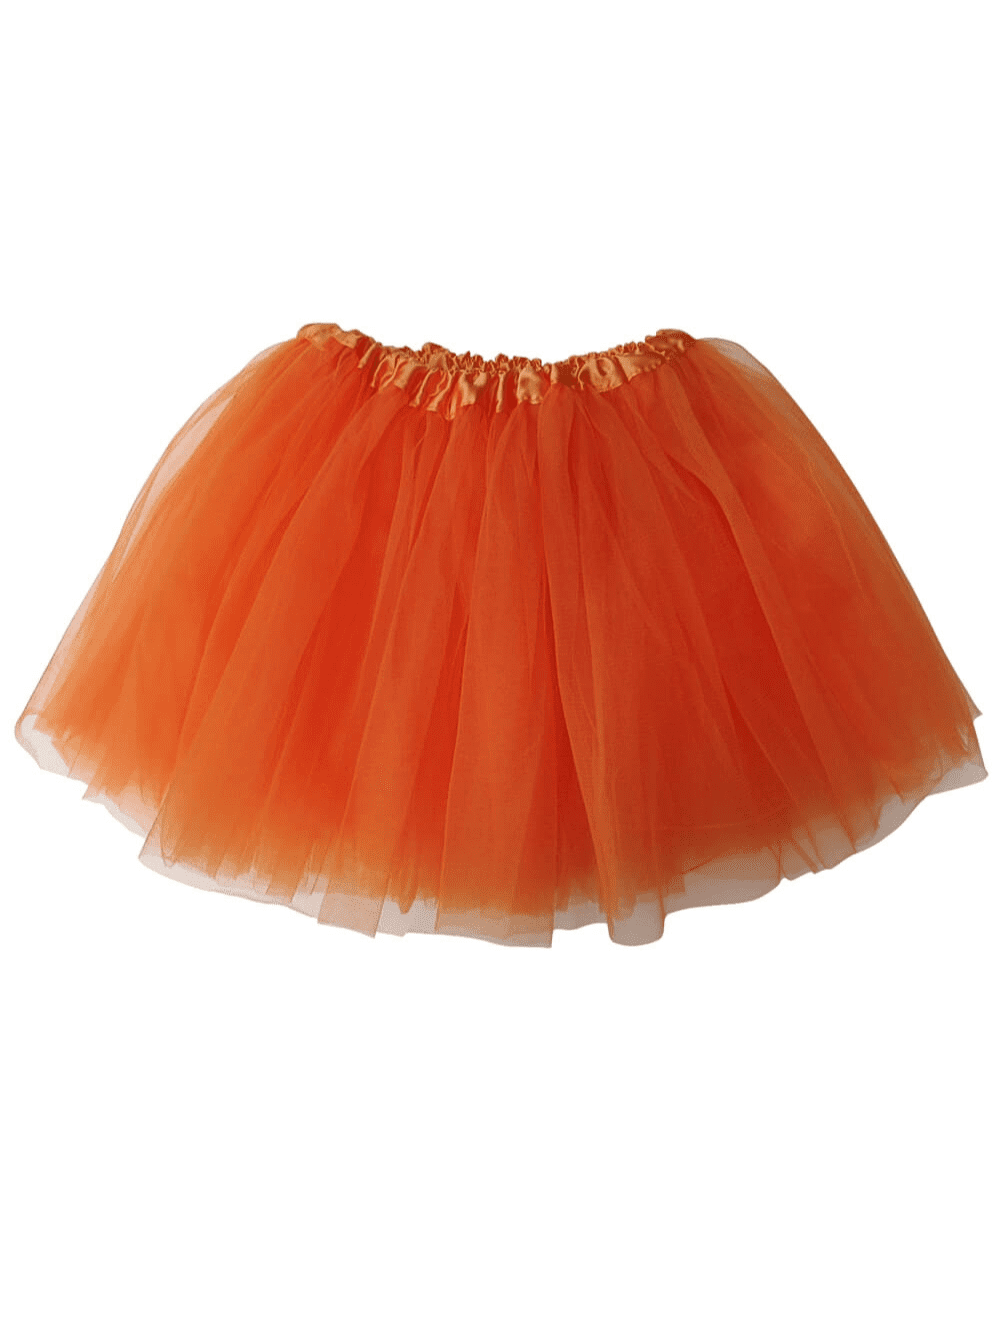 Neon Orange Green & Black Tutu Halloween 80s Fancy Dress Trick Or Treat Skirt 